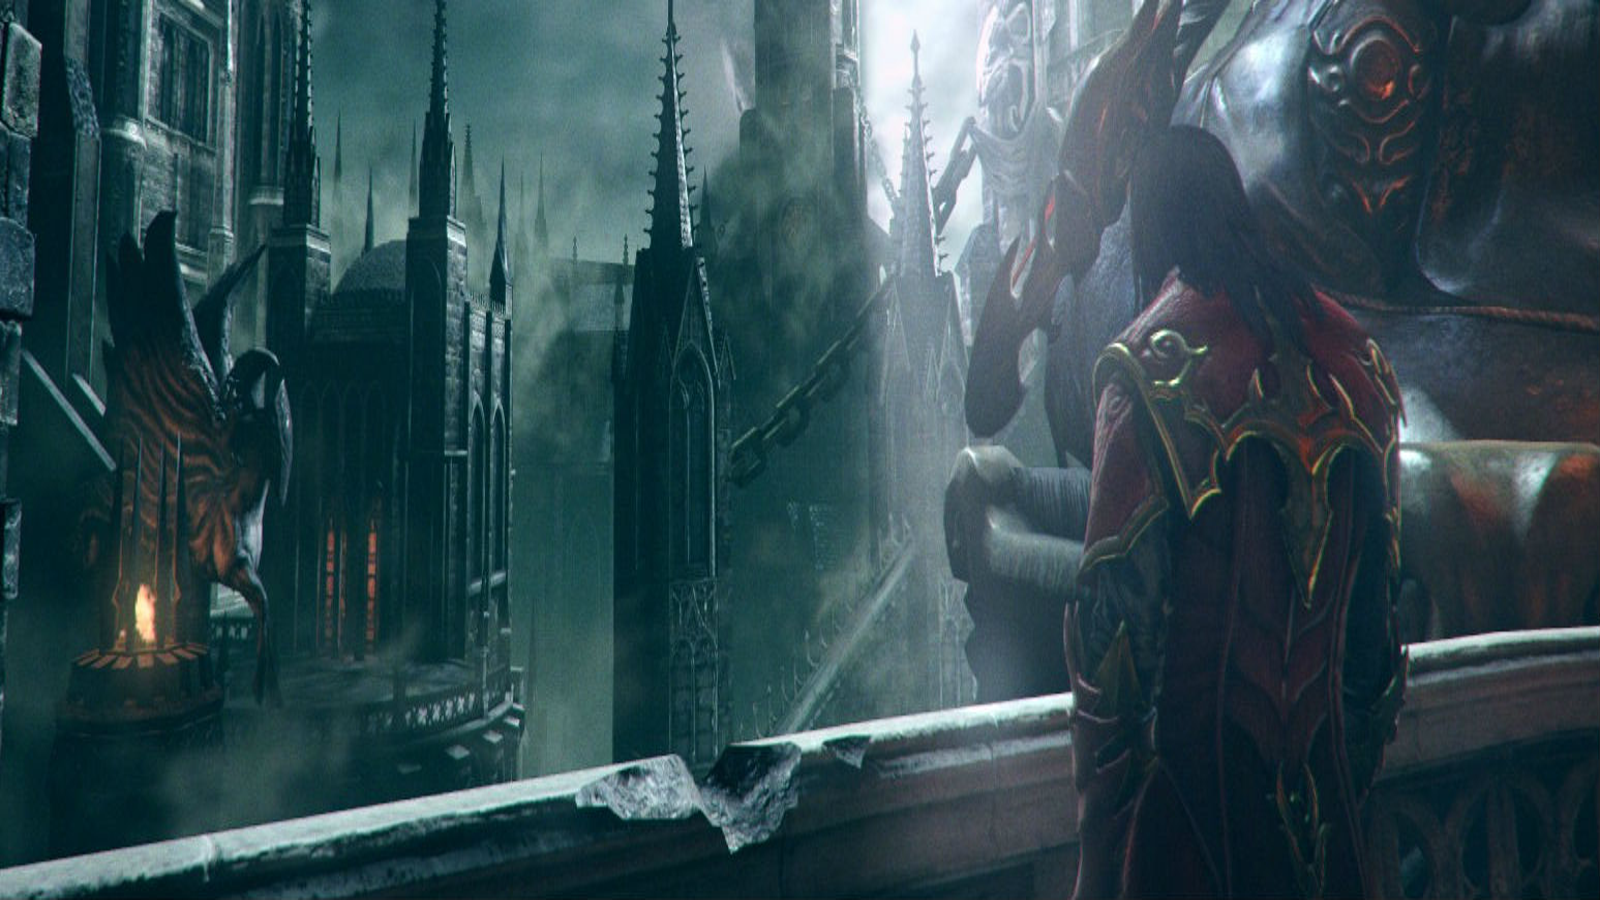 Castlevania: Lords of Shadow - GameSpot